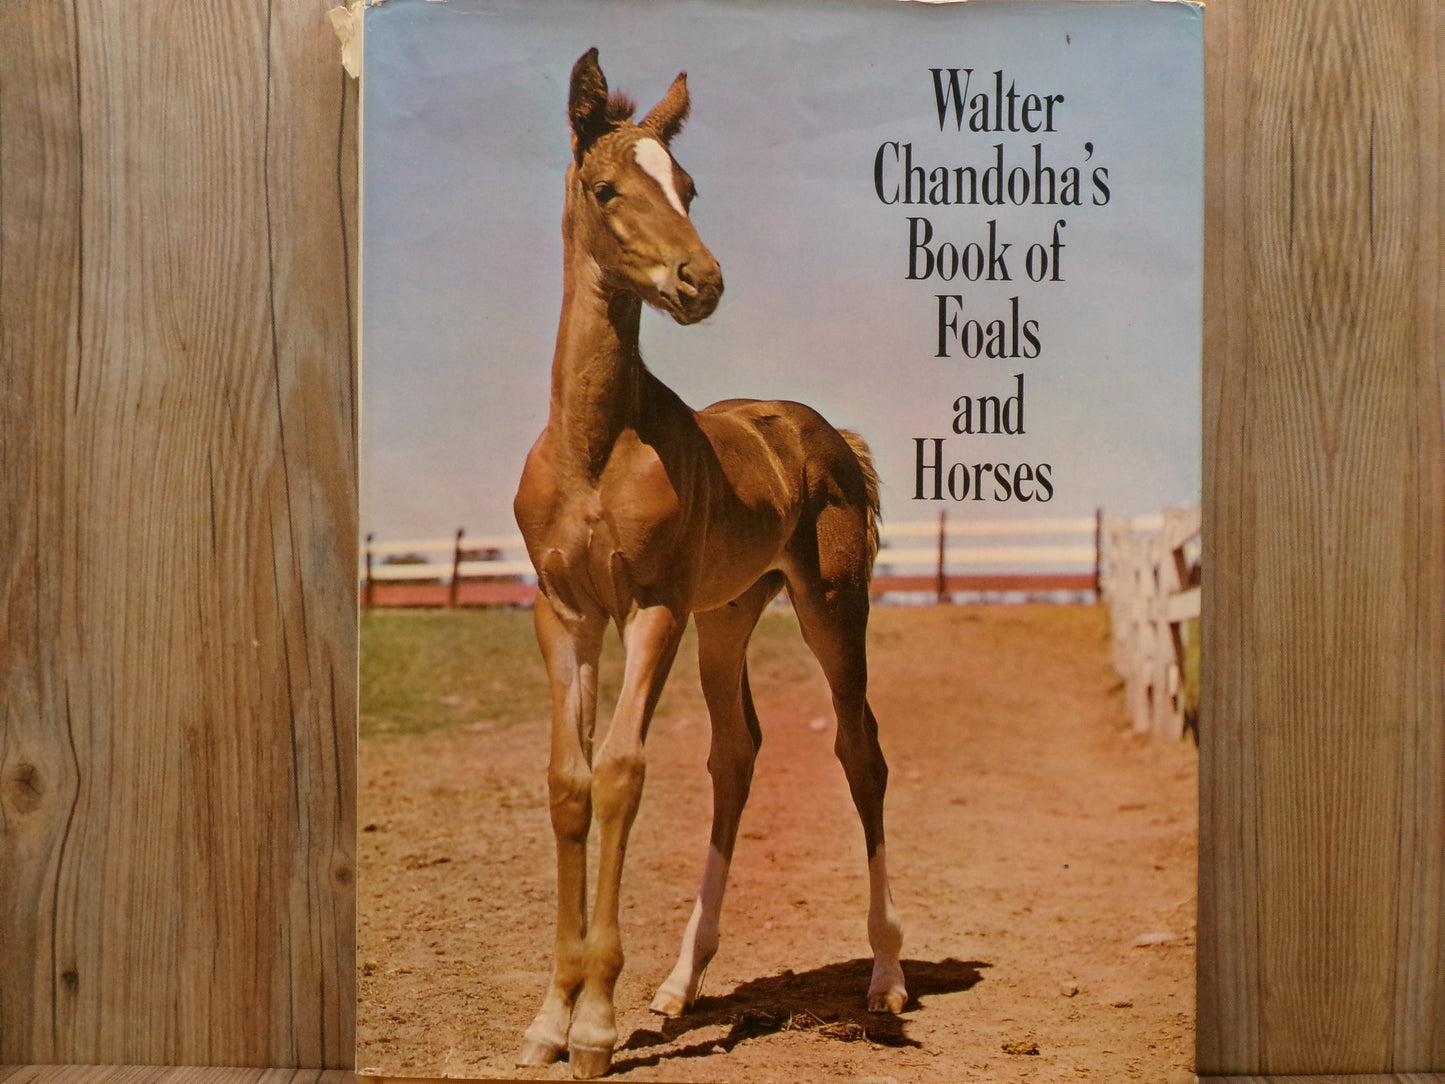 Walter Chandoha's Book of Foals and Horses by Walter Chandoha